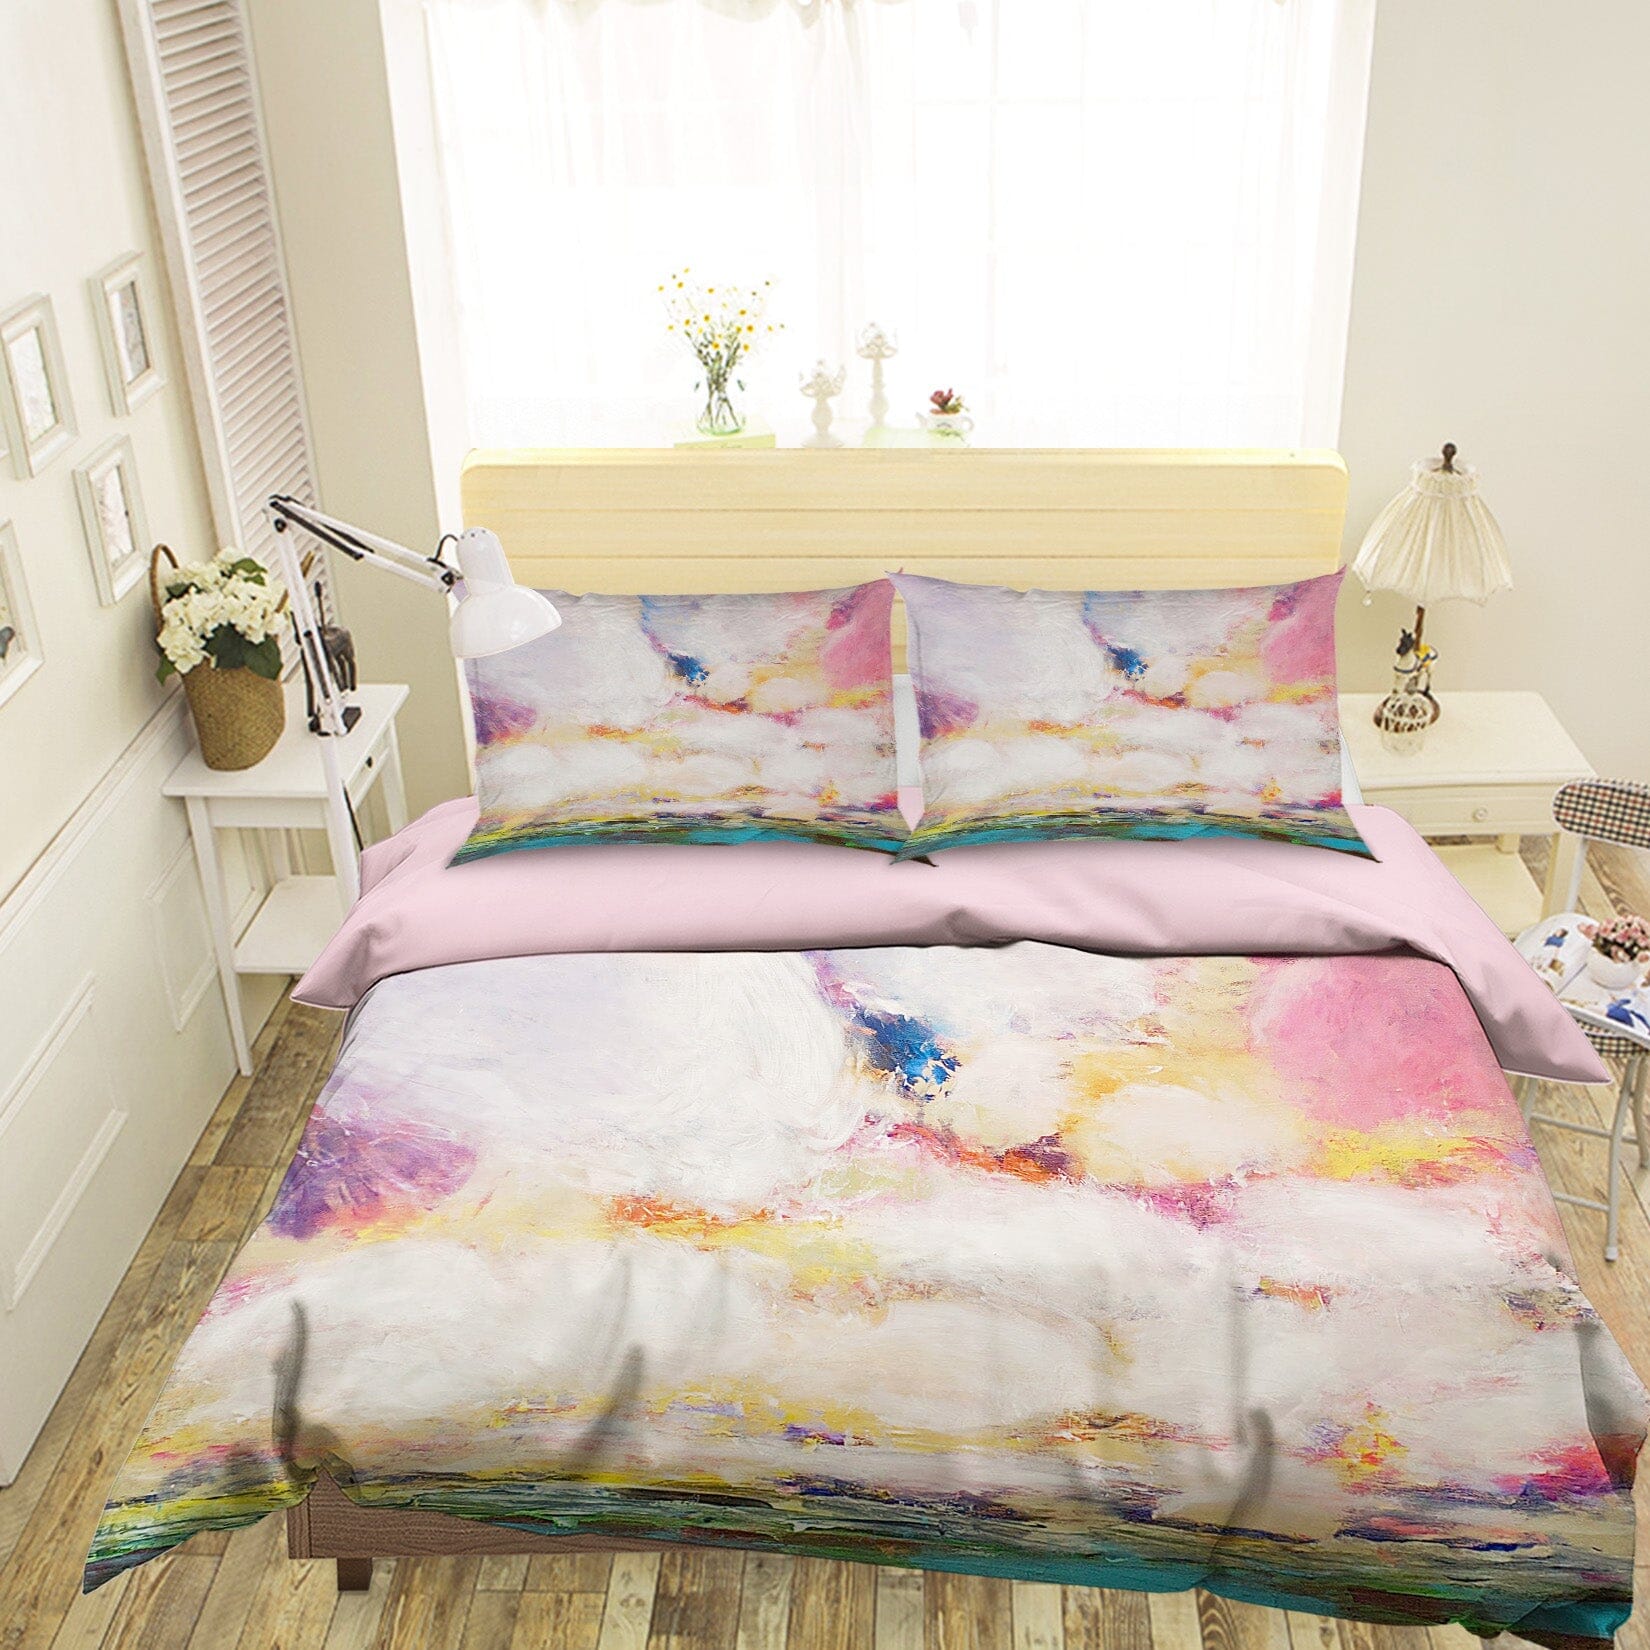 3D Long Way 2104 Allan P. Friedlander Bedding Bed Pillowcases Quilt Quiet Covers AJ Creativity Home 